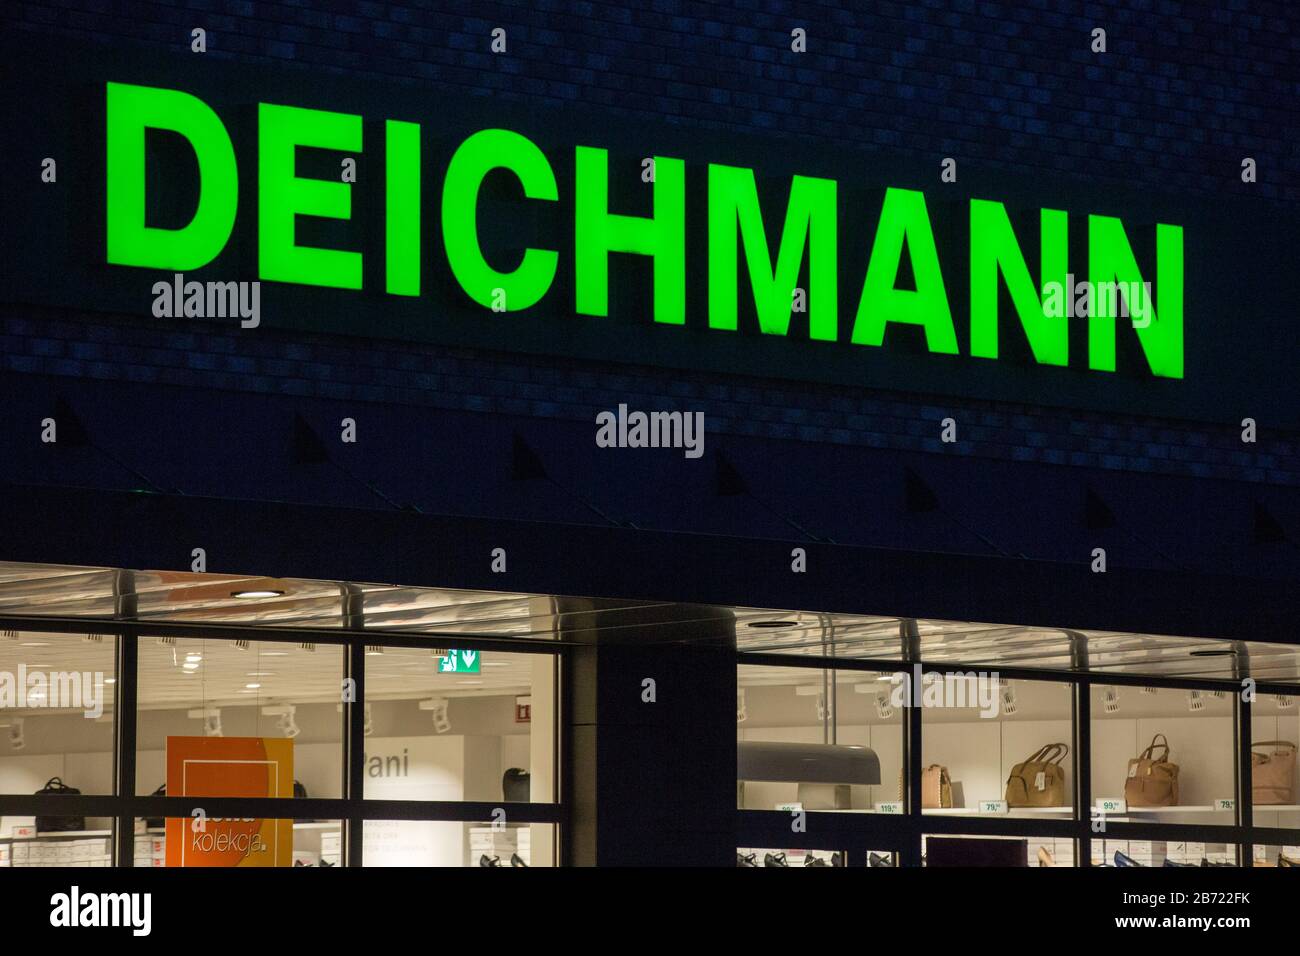 Deichmann logo Stock - Alamy